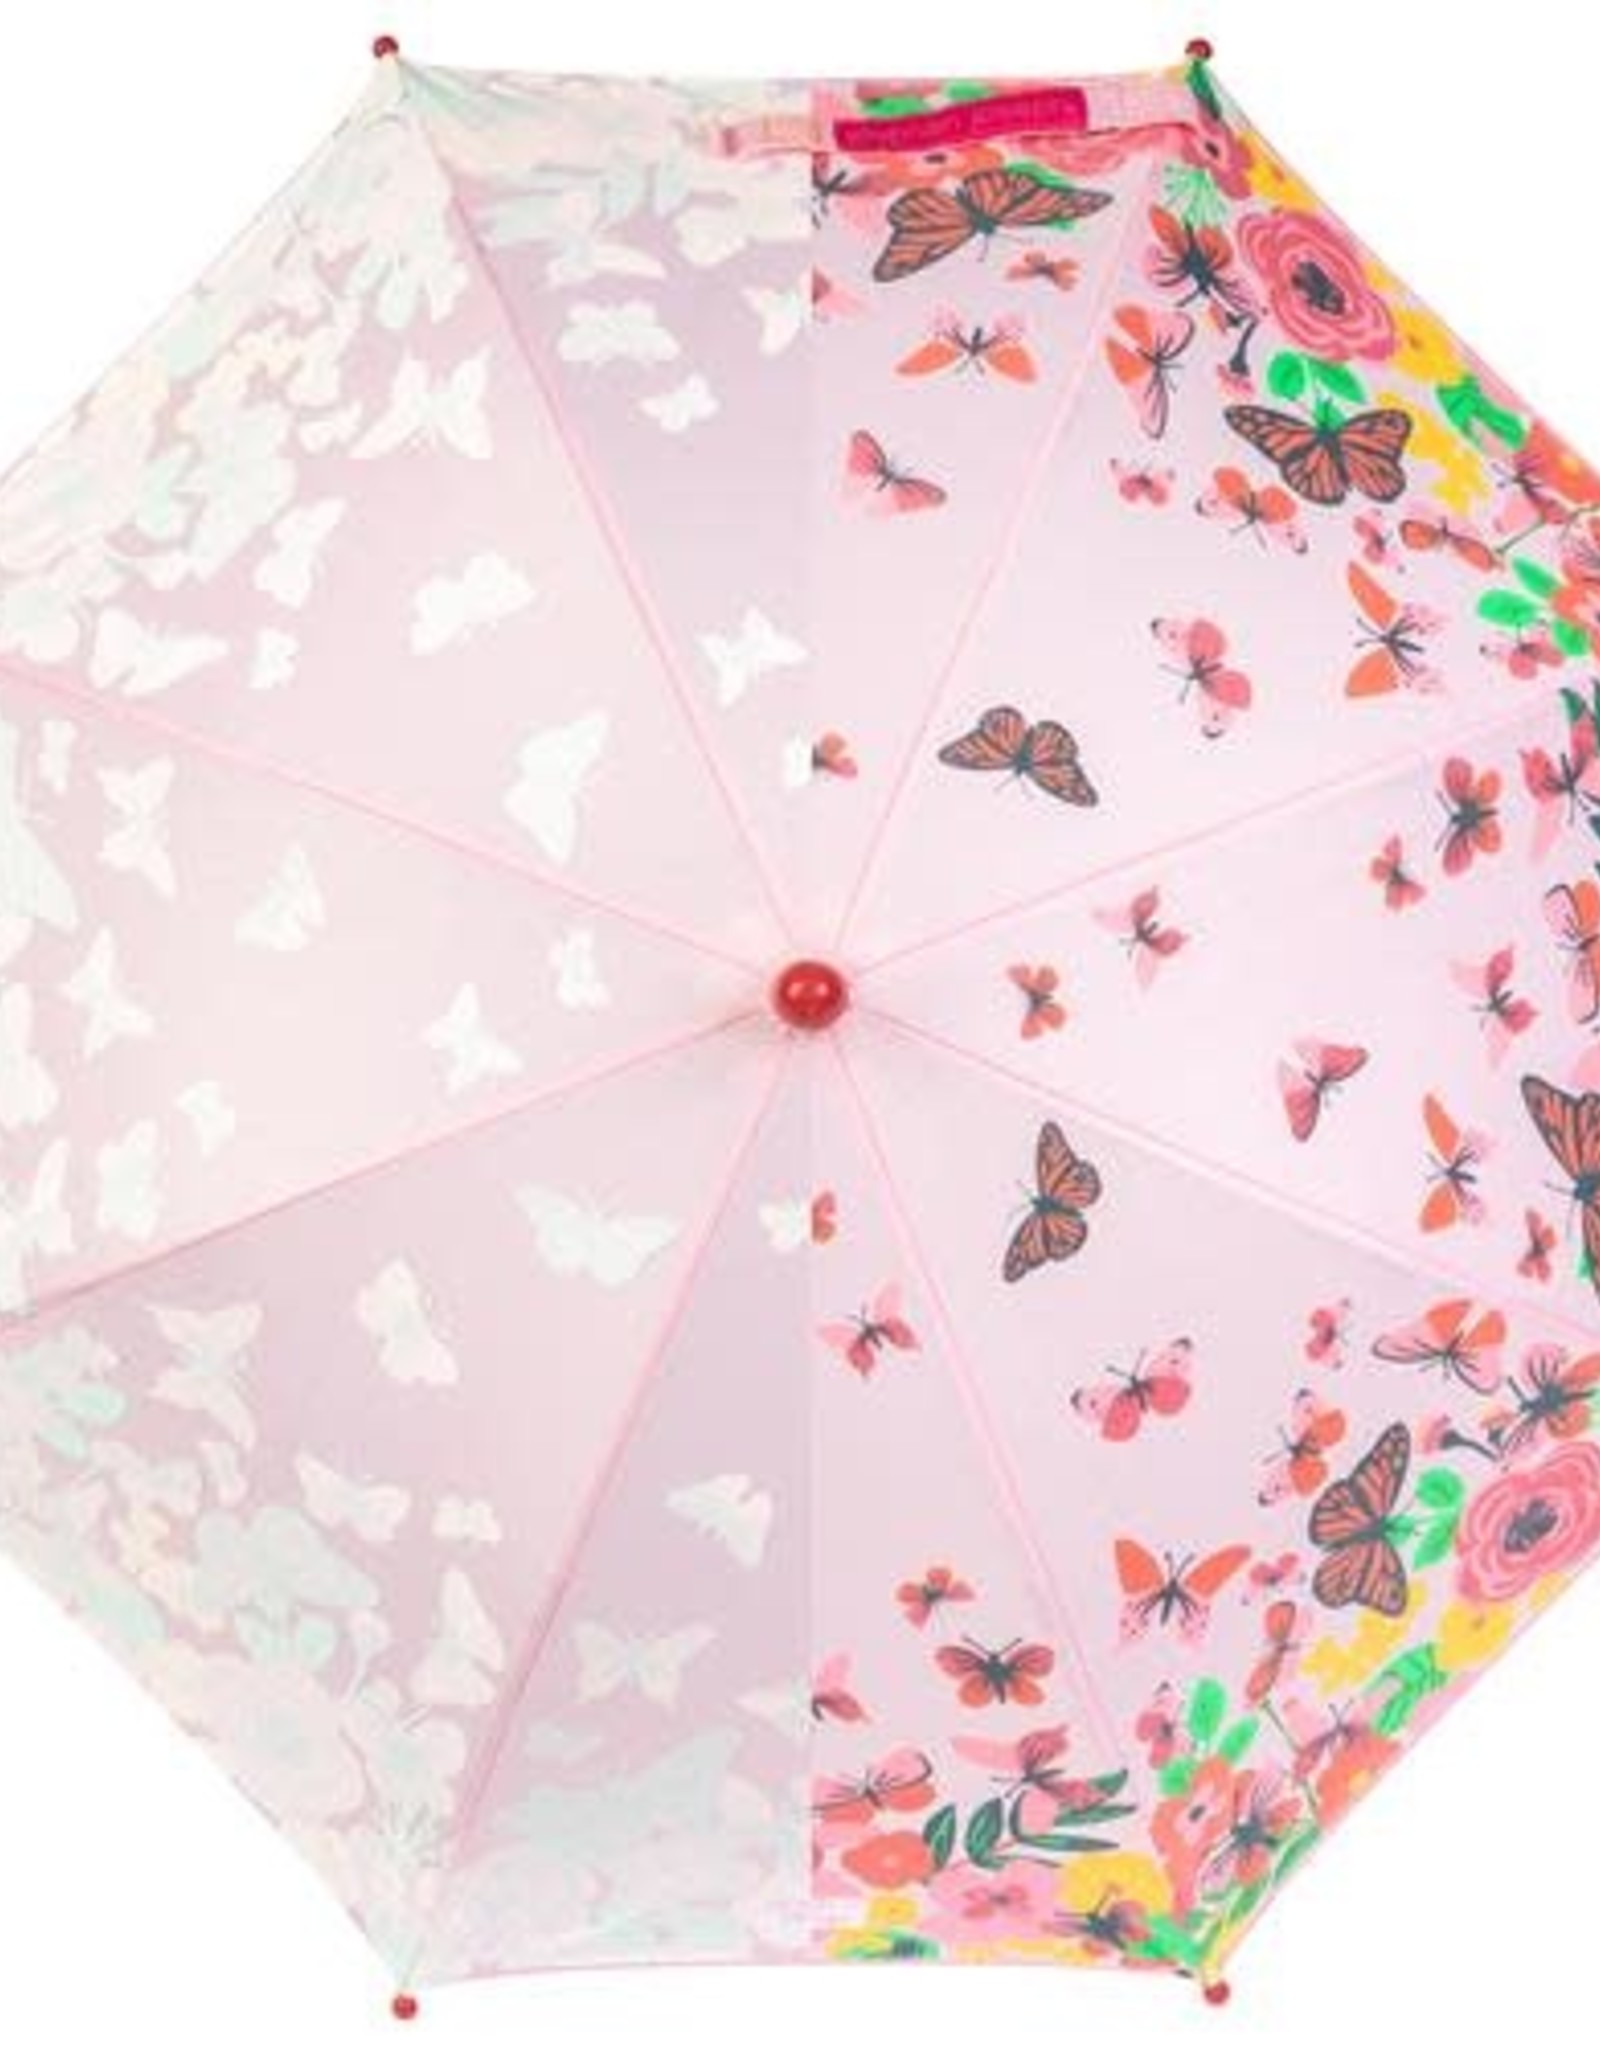 Stephen Joseph Colour Change  Umbrella